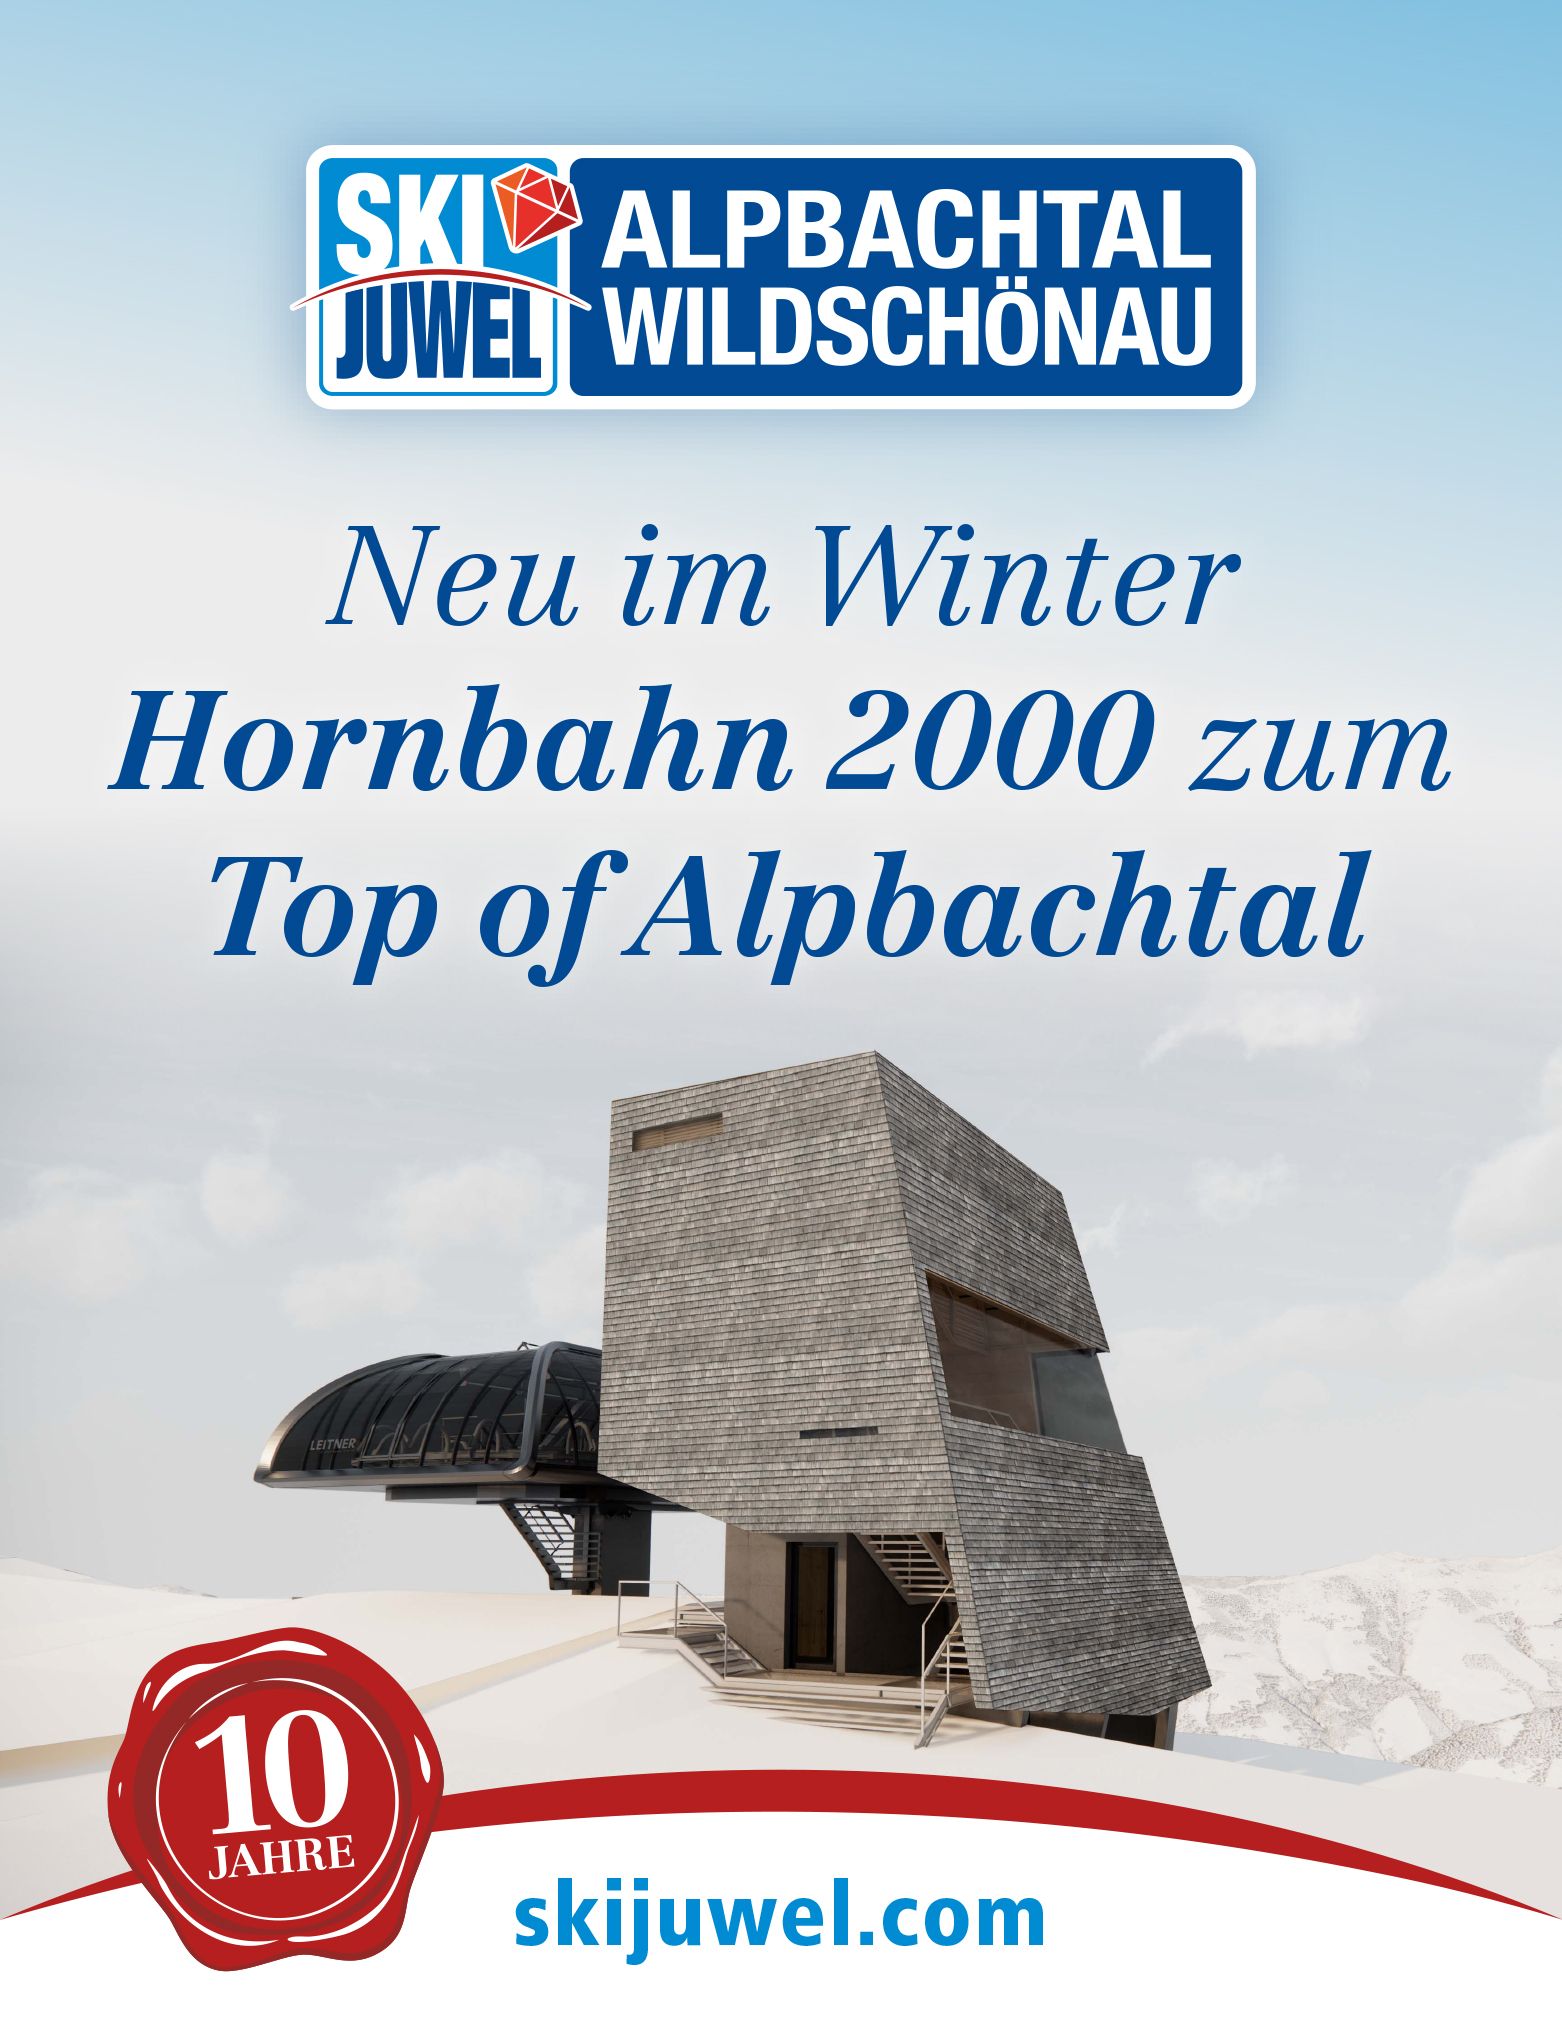 Hornbahn 2000 & Viewpoint Top of Alpbachtal